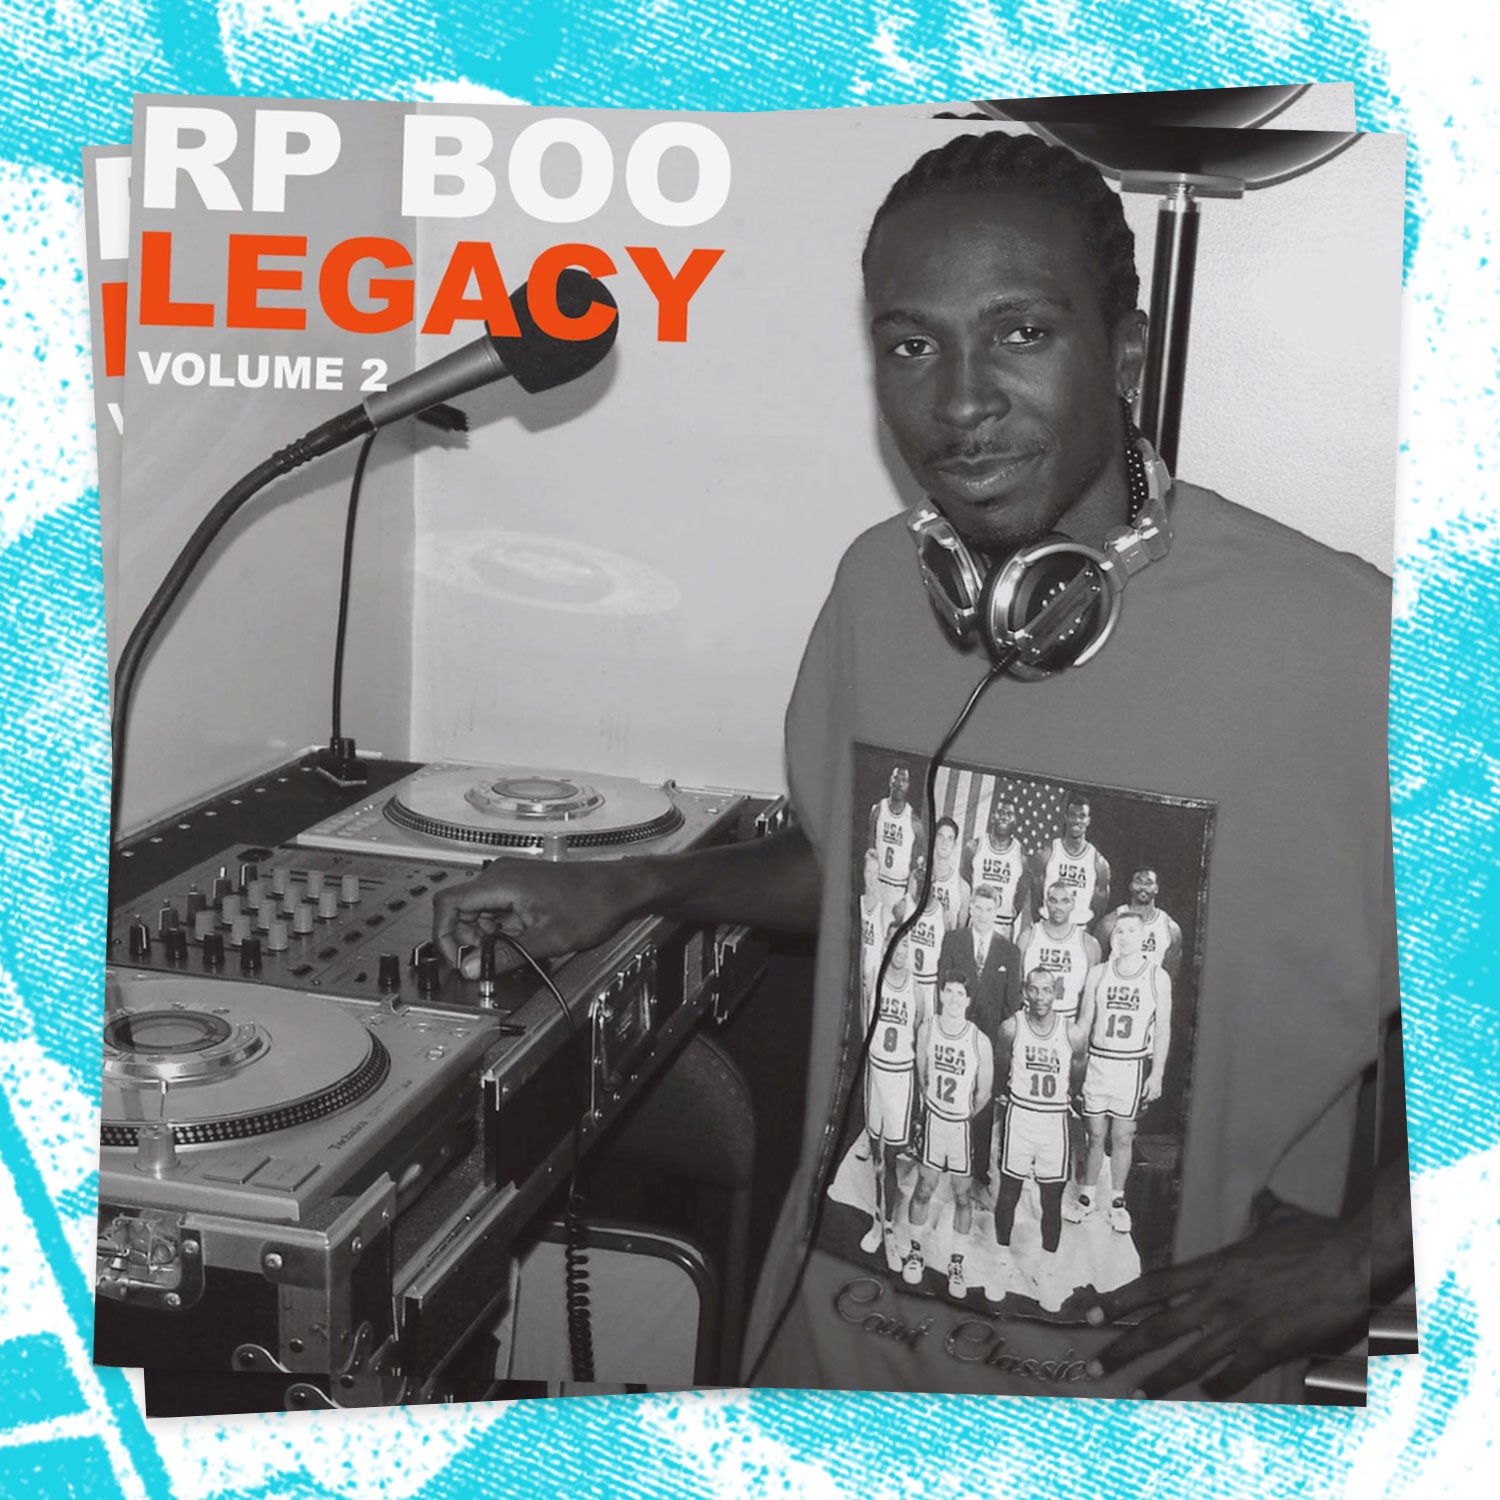 RP Boo - Legacy Volume 2